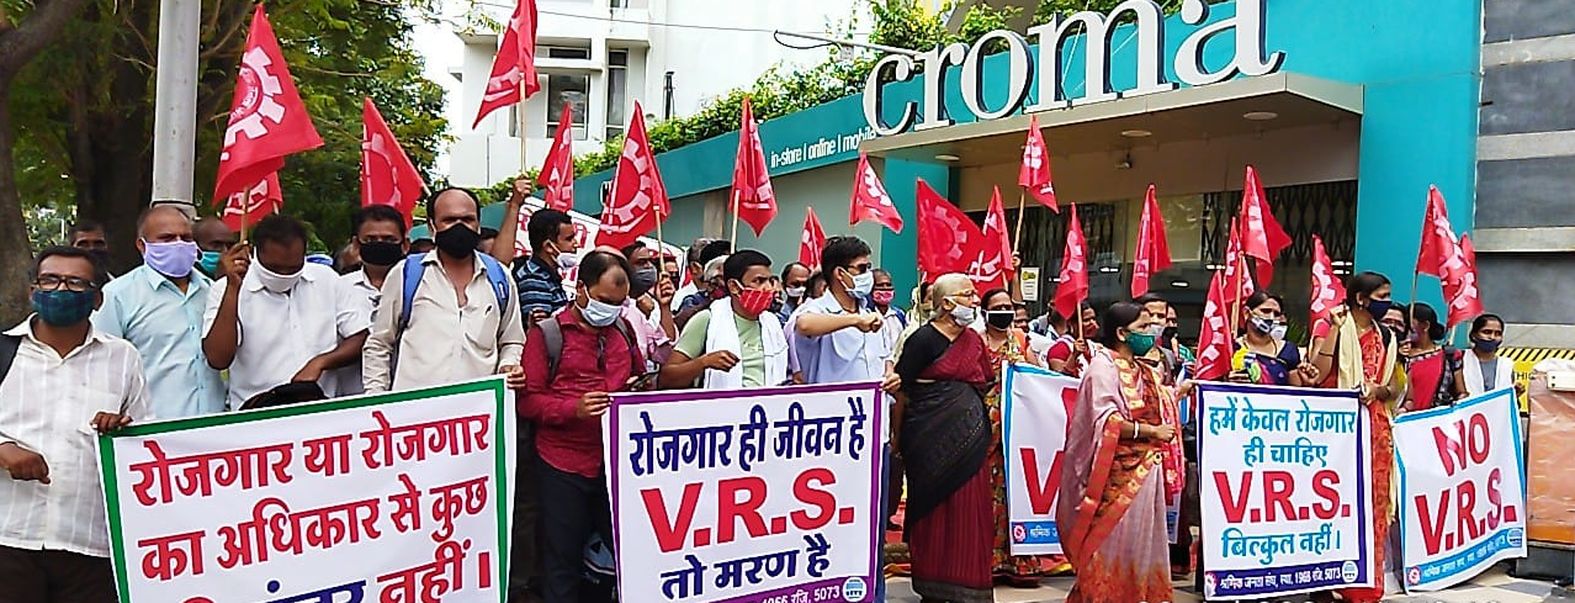 Century workers protest in Mumbai